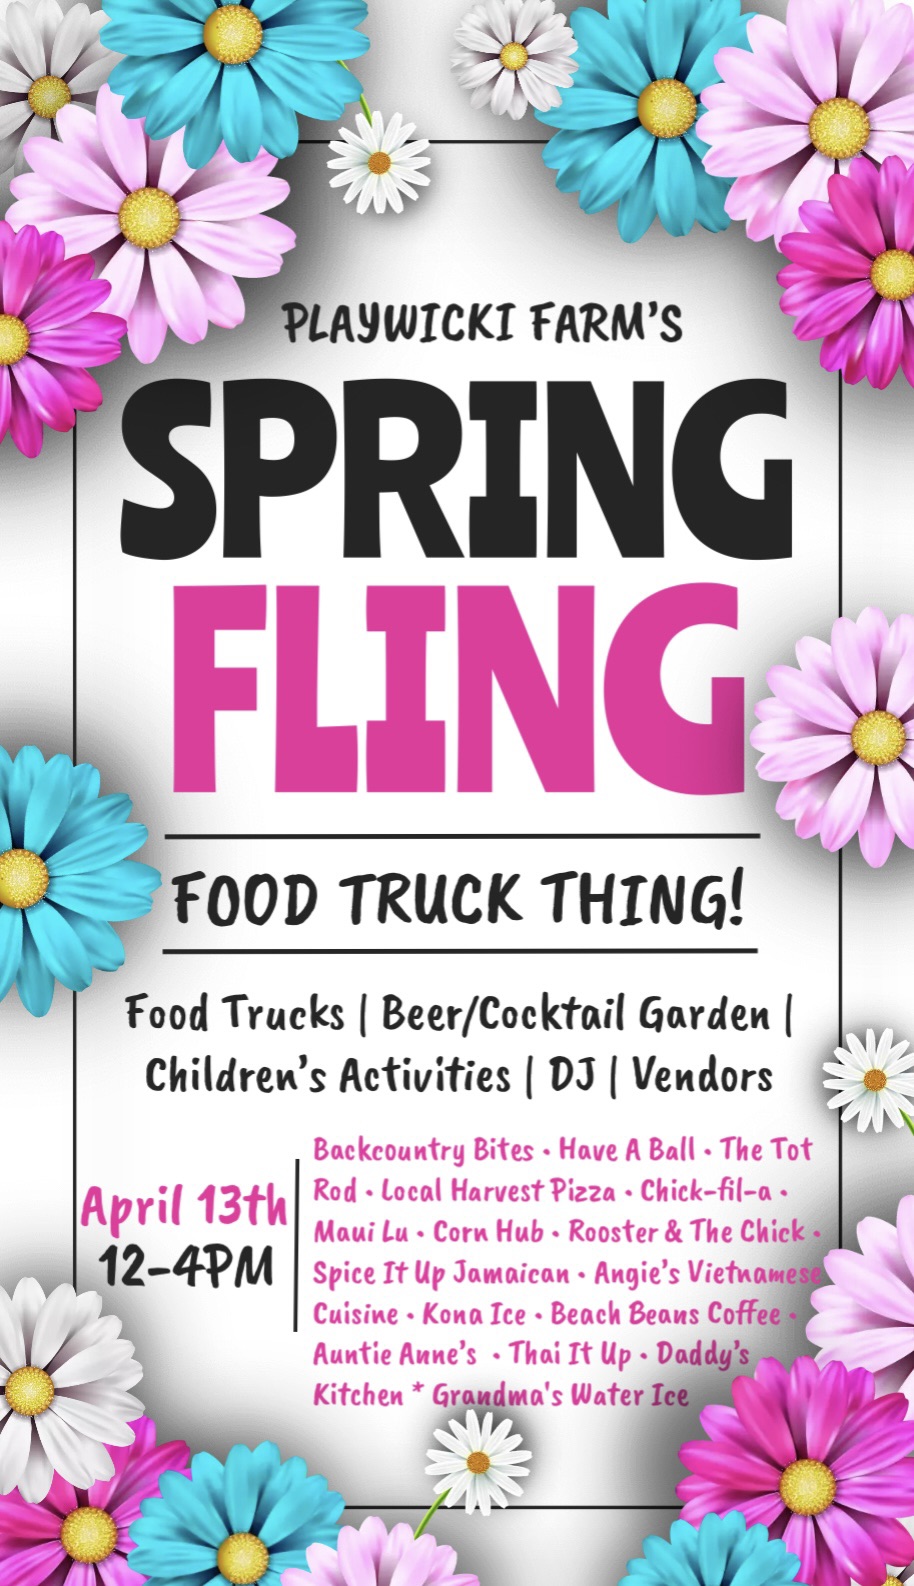 Jax’s at Spring Fling Food Truck Thing @Playwicki Farm